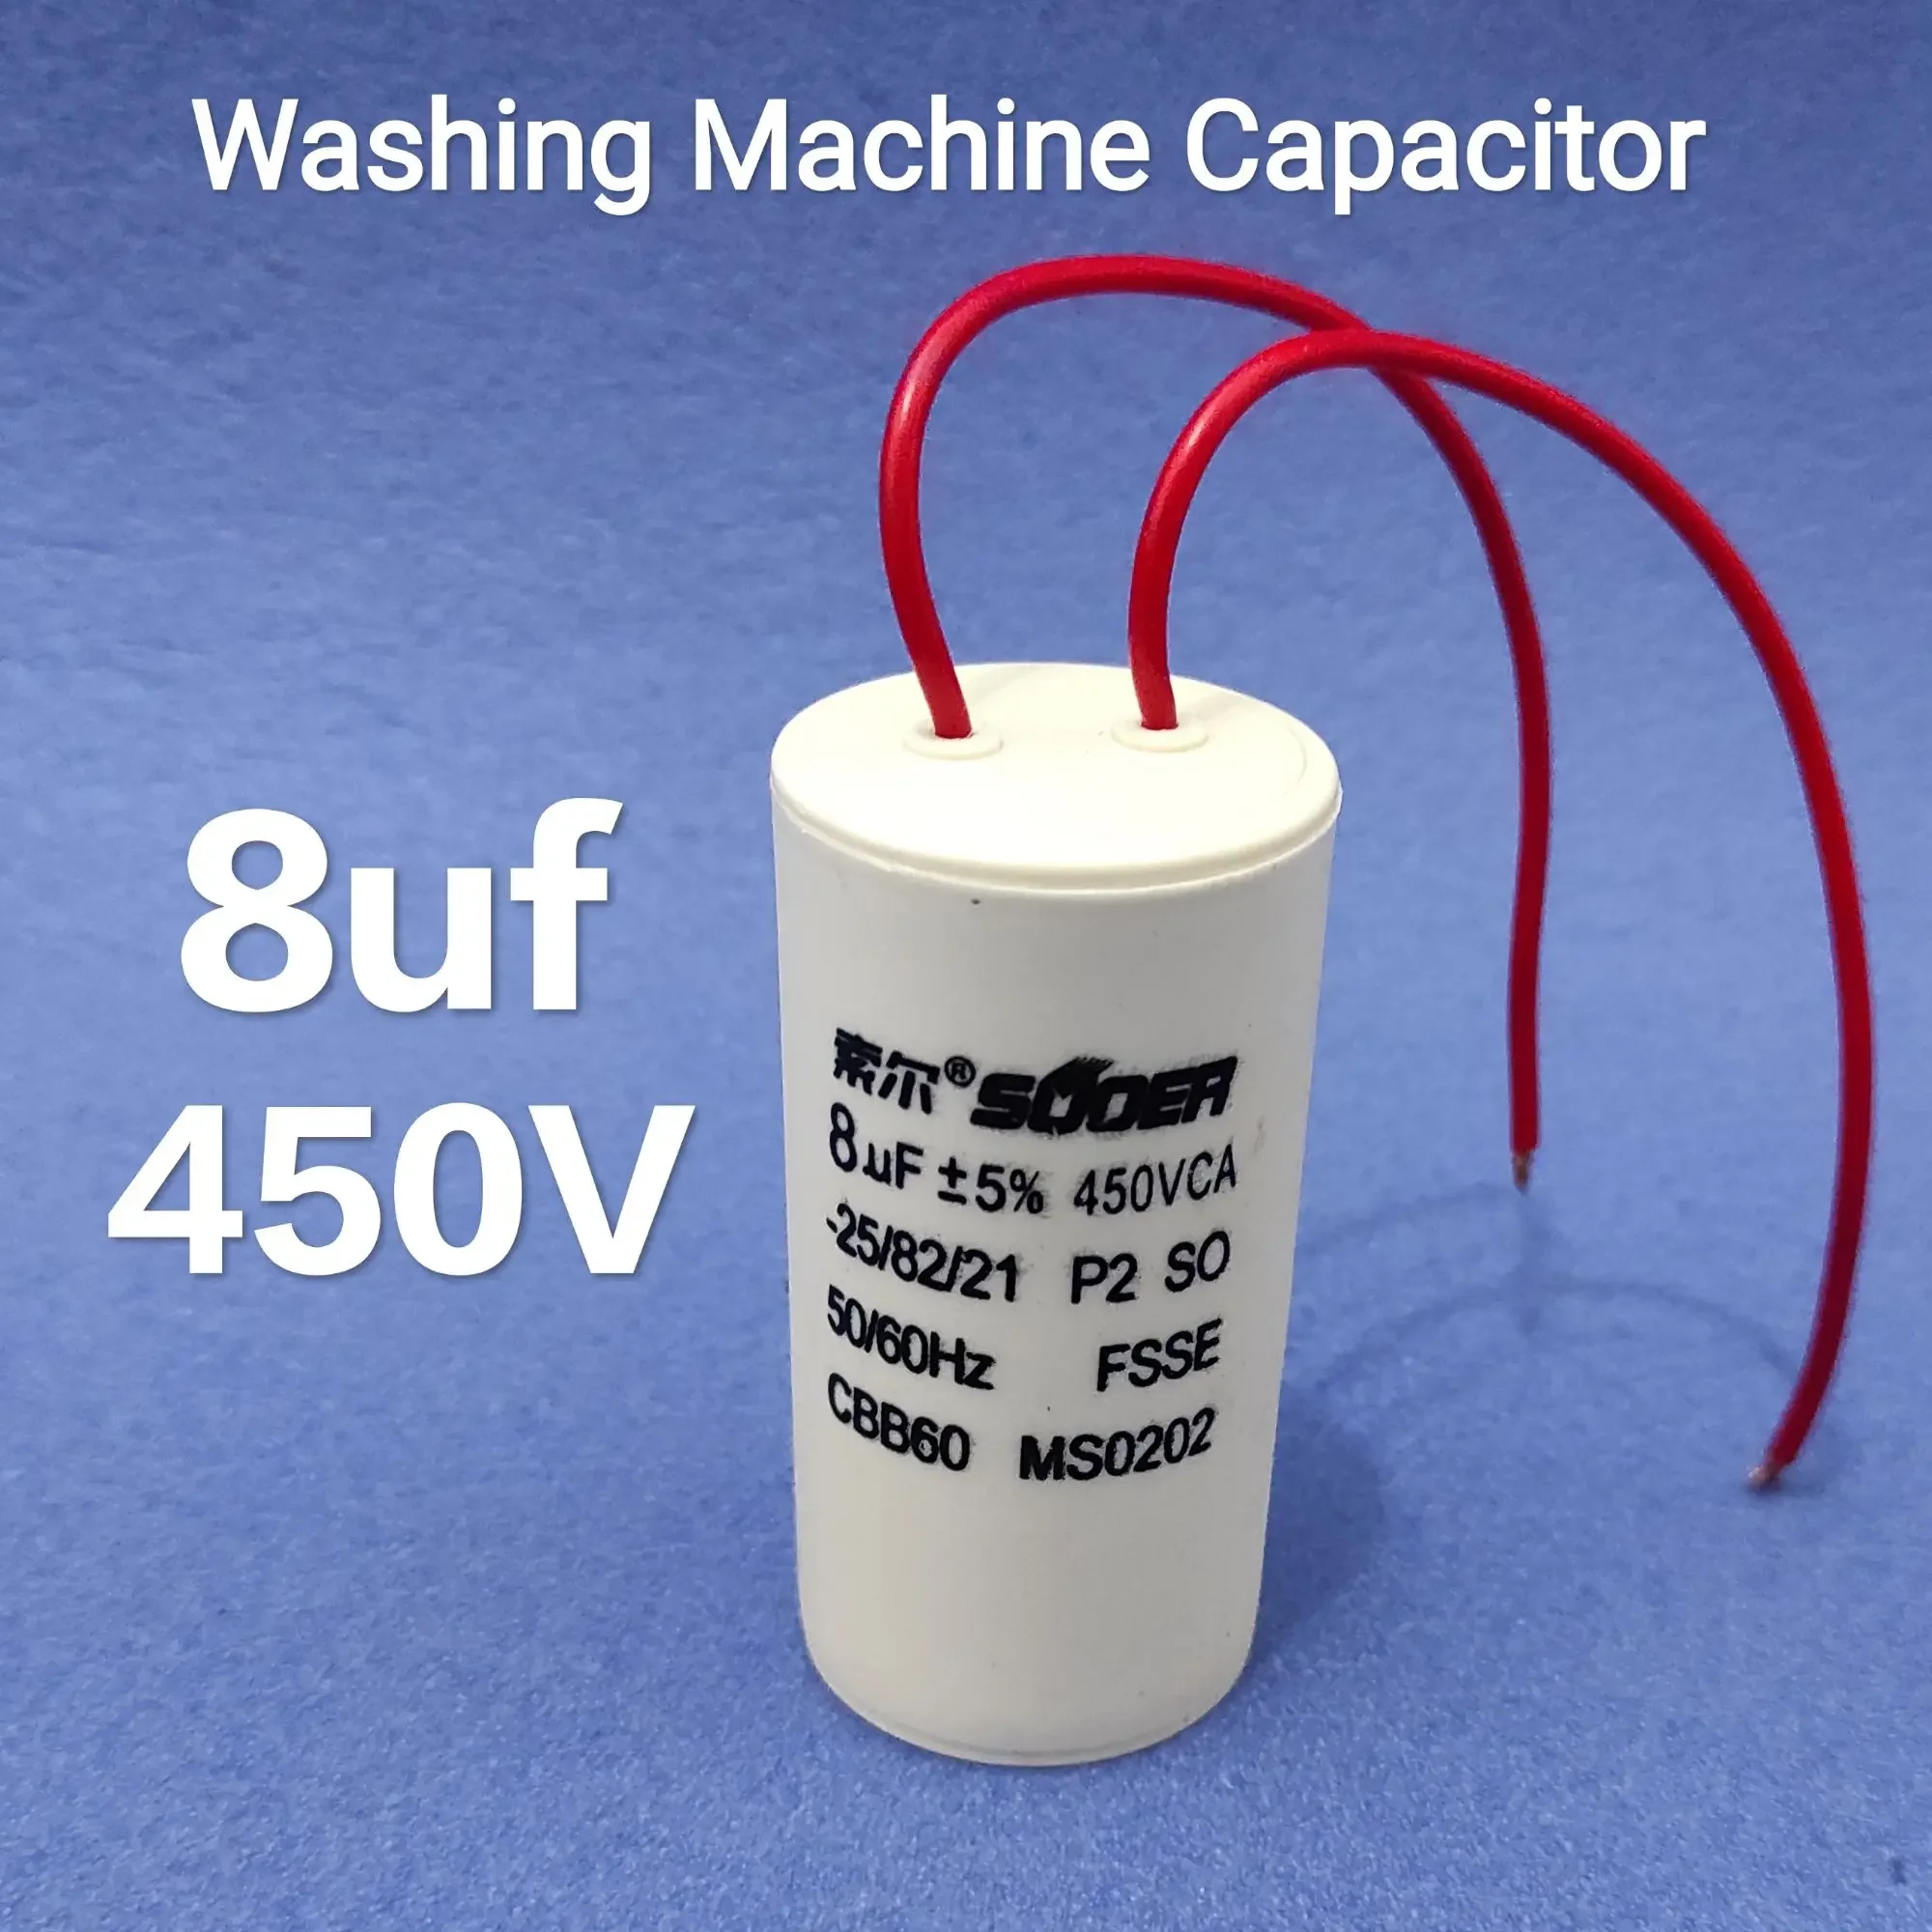 8uf 450V Washing Machine Capacitor kapasitor mesin basuh 8uf 450v